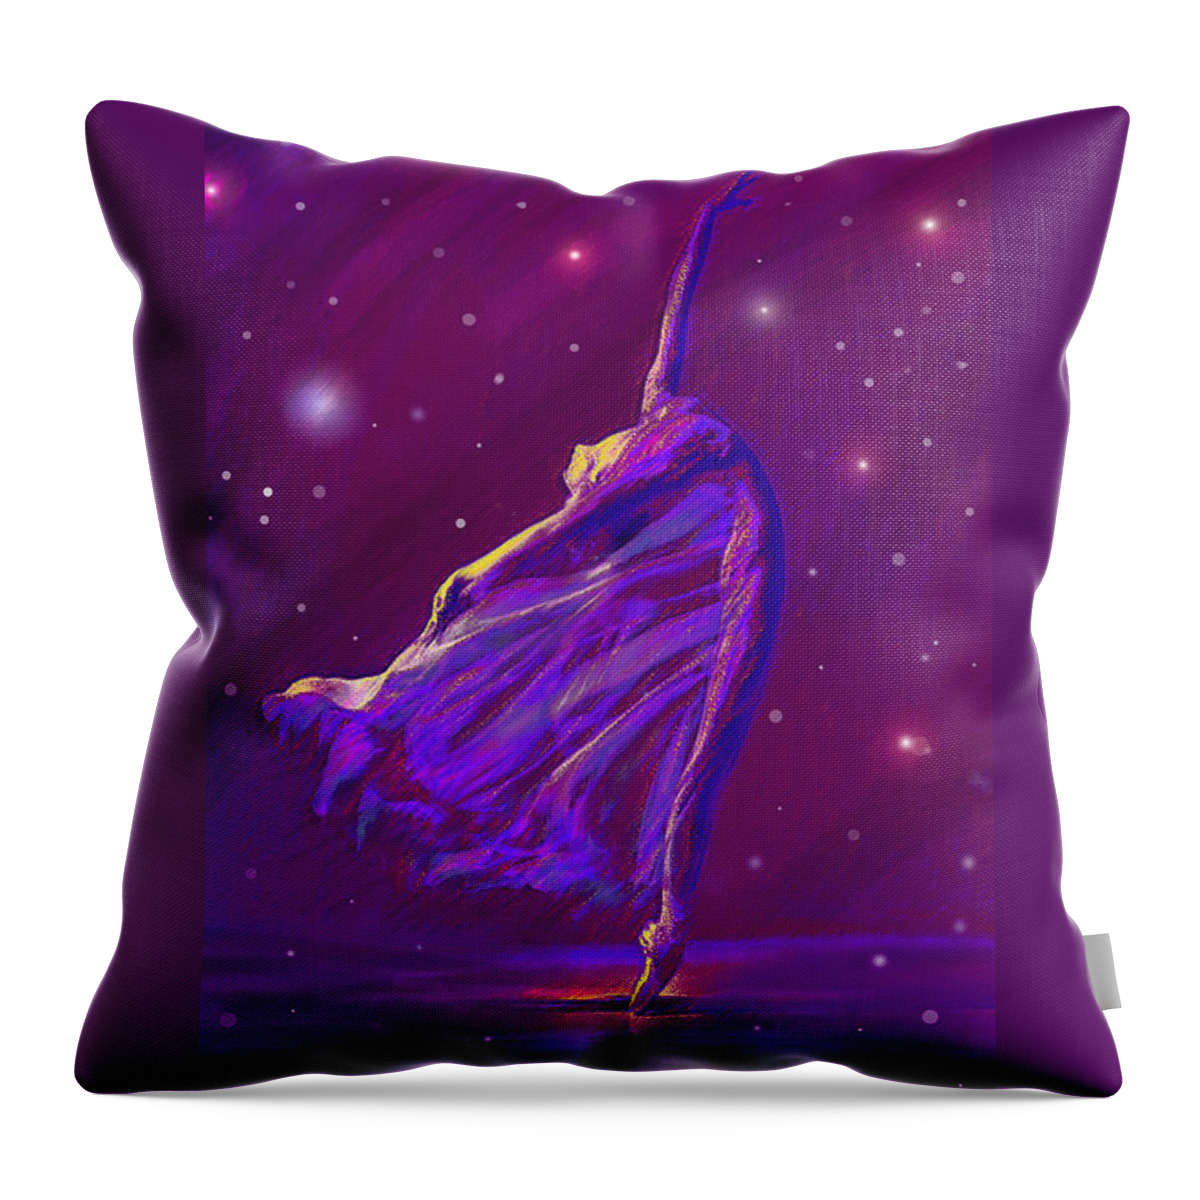 Jane Schnetlage Throw Pillow featuring the digital art Birth Of The Cosmos by Jane Schnetlage